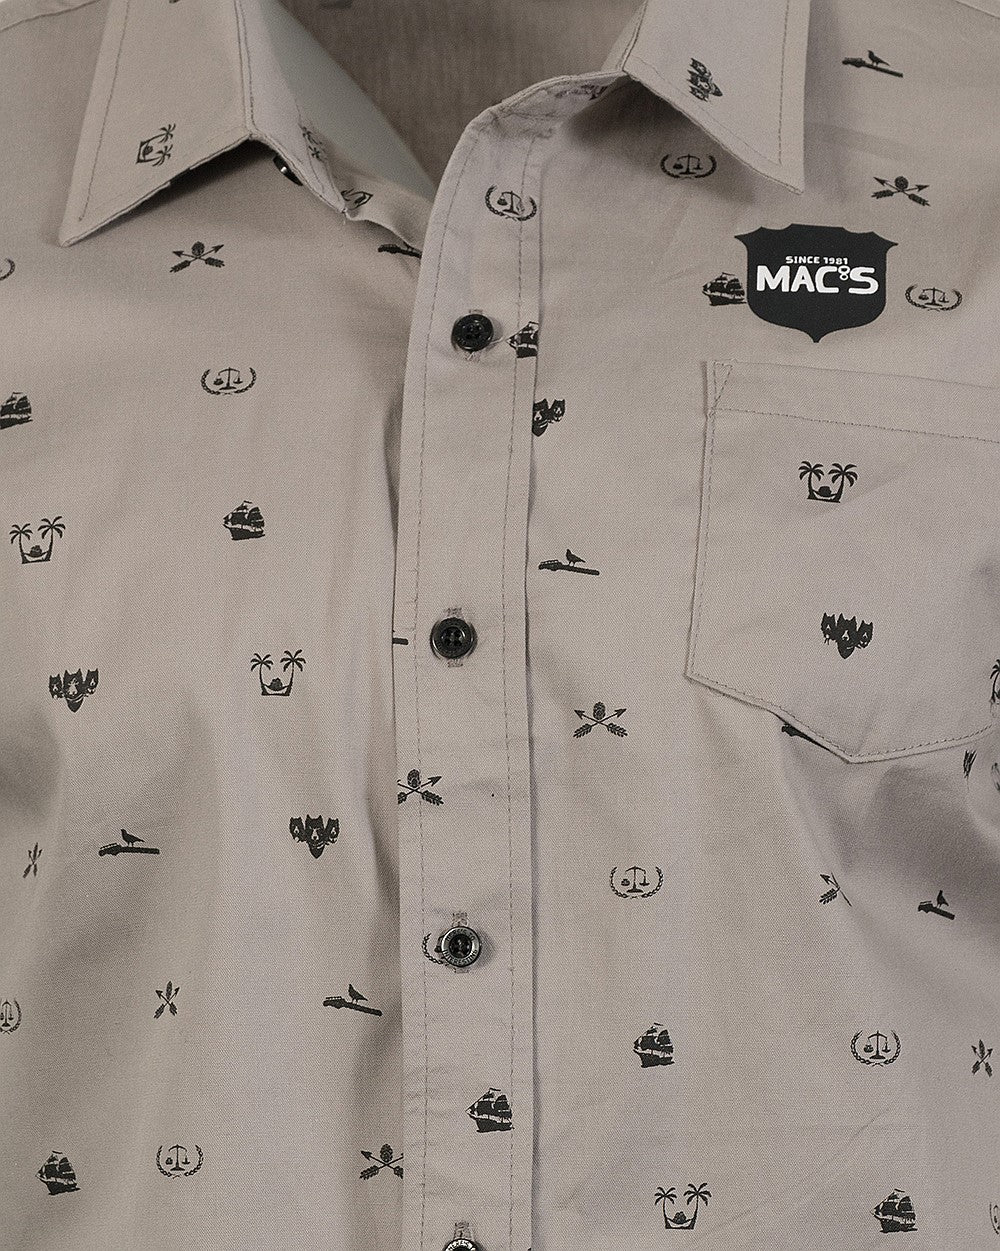 MAC's Shirt - Wear It Proud NZL